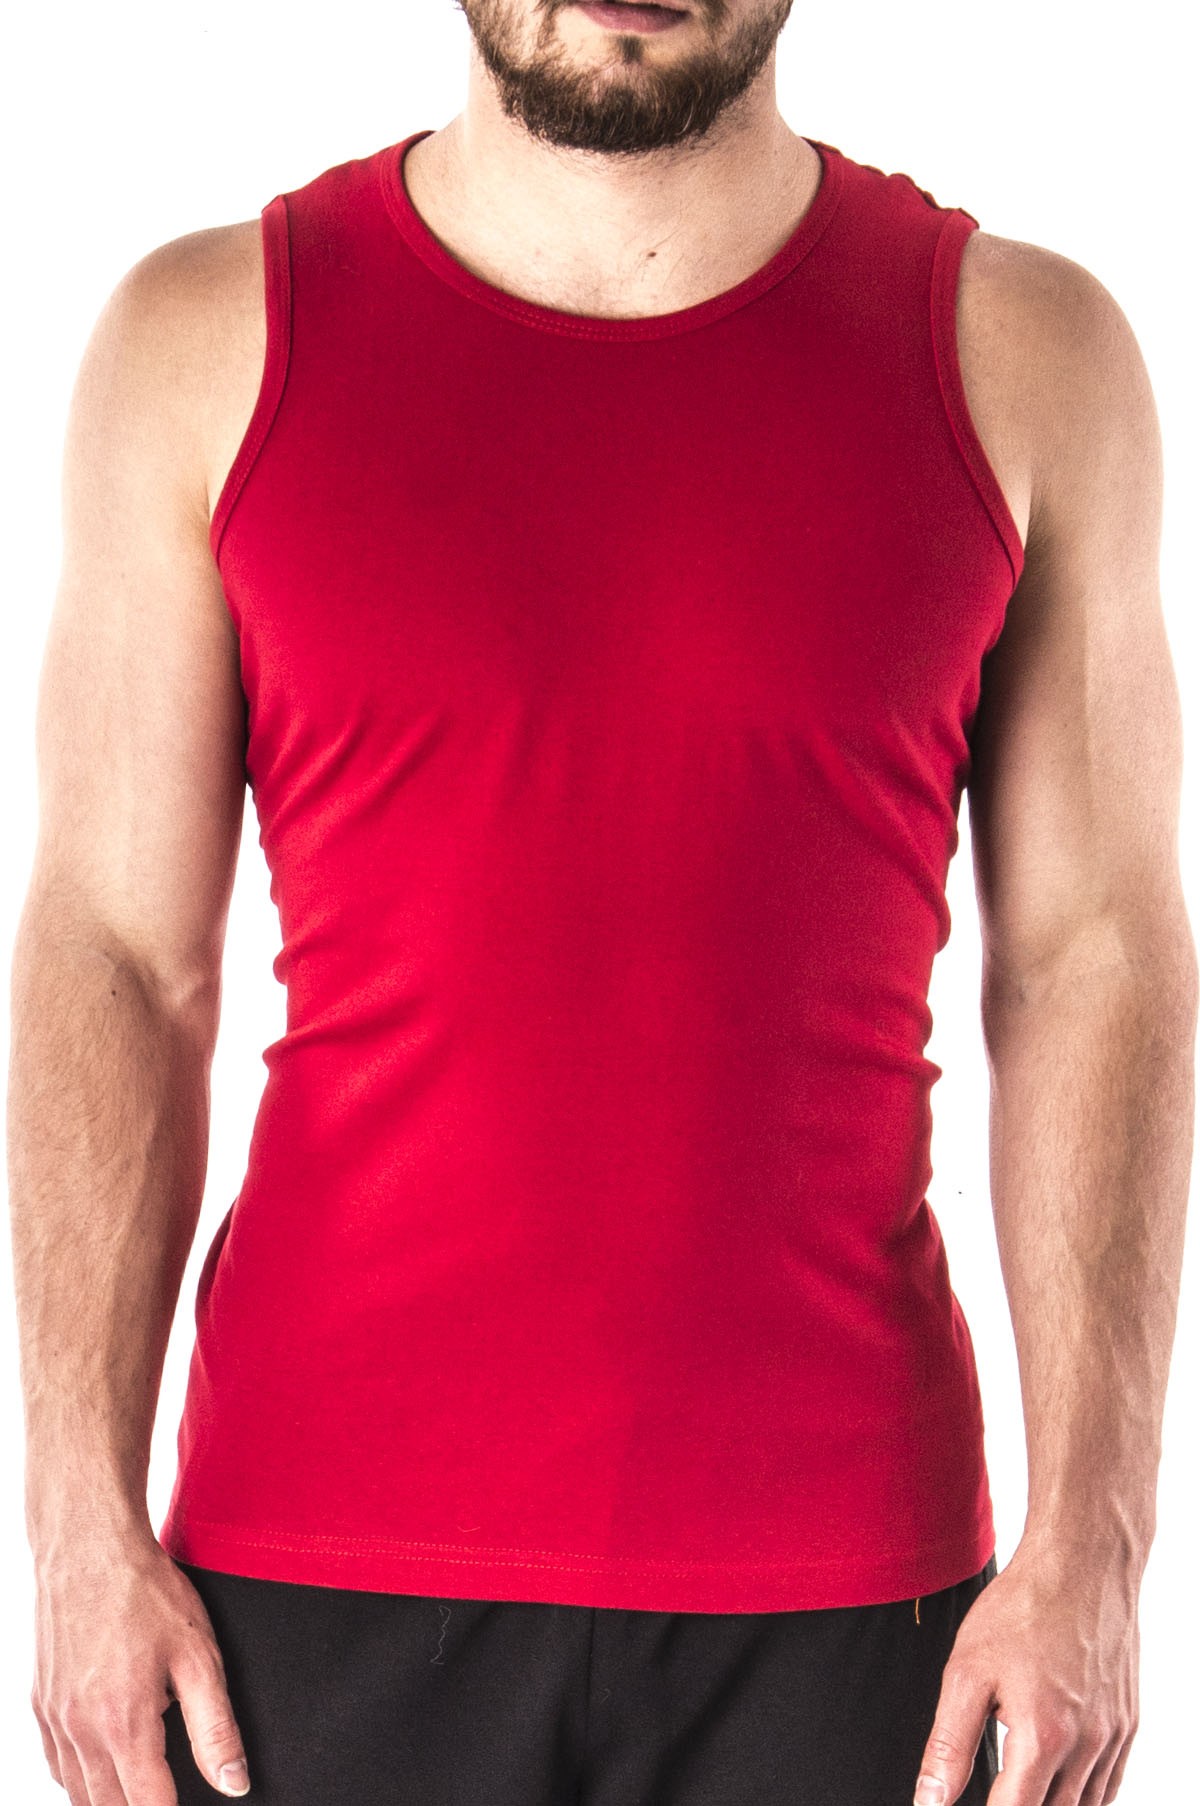 Koszulka bezrękawnik am10 - czerwona